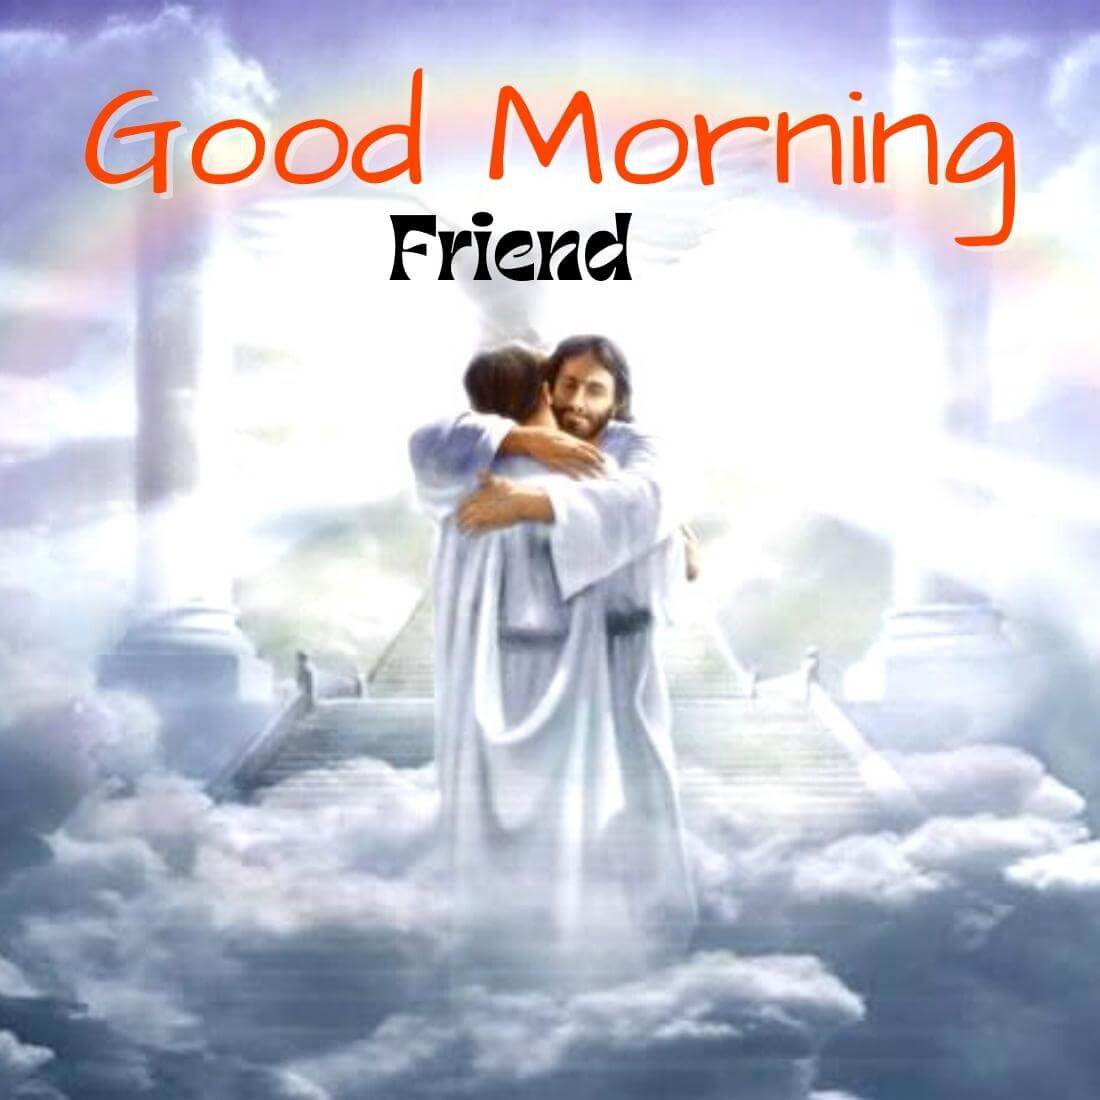 Free HD Lord Jesus good morning Images Wallpaper Free Download